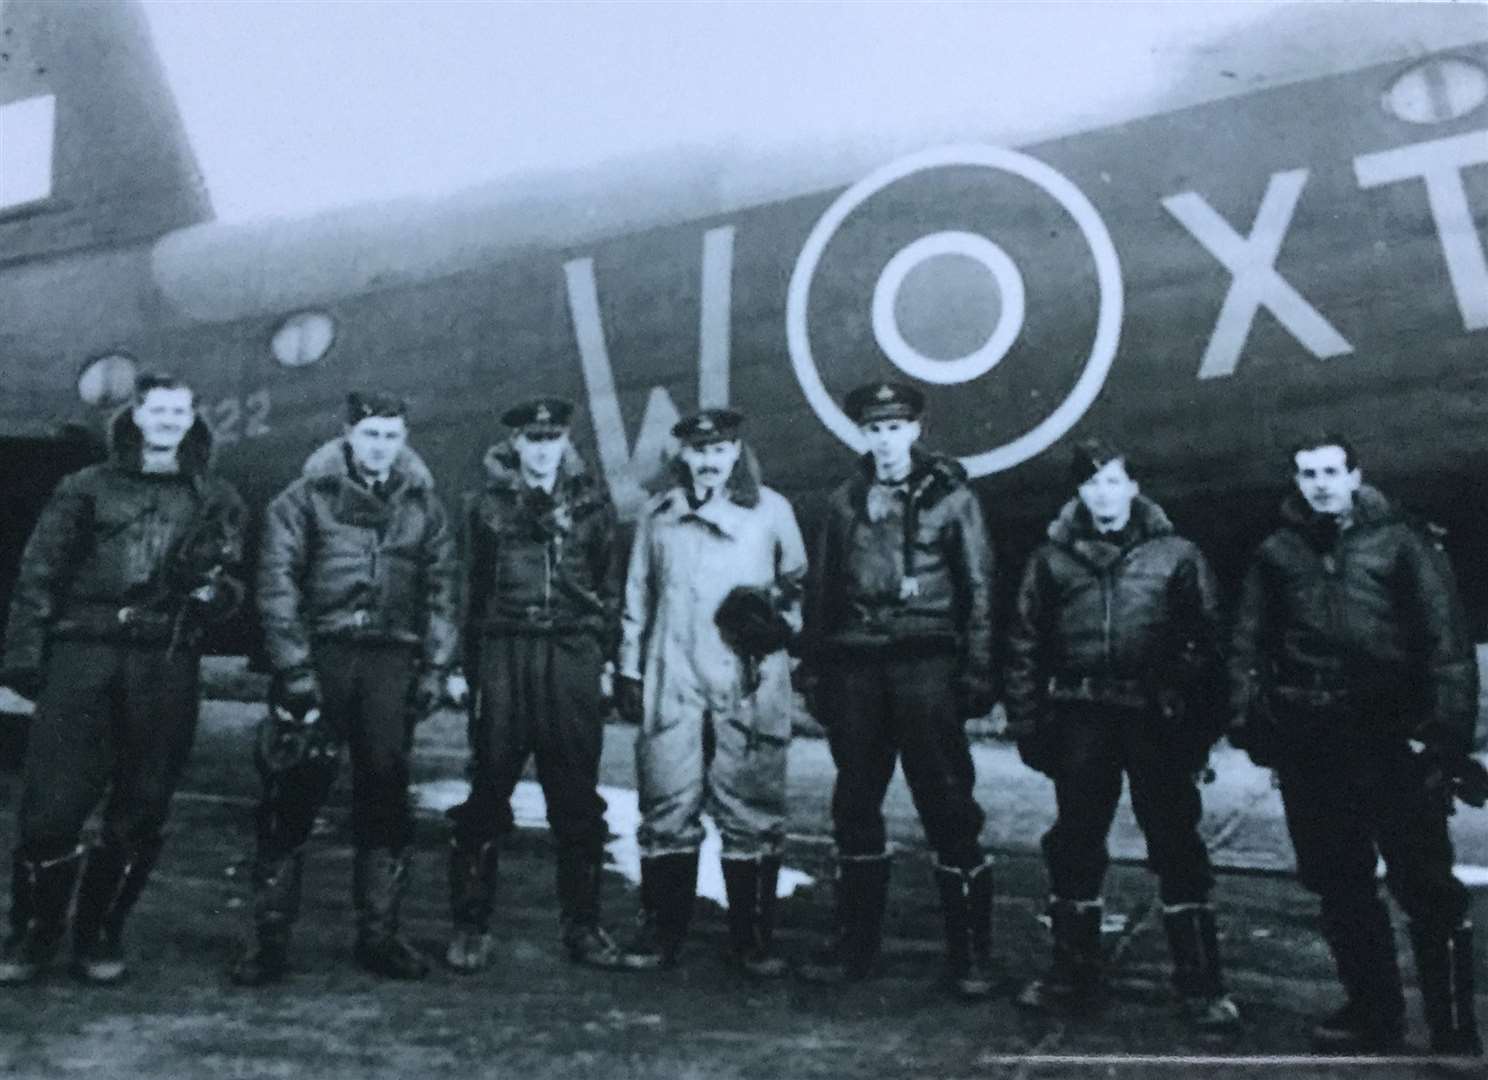 The crew members of the Short Stirling Bomber, including Sgt Leonard Shrubsall, far right